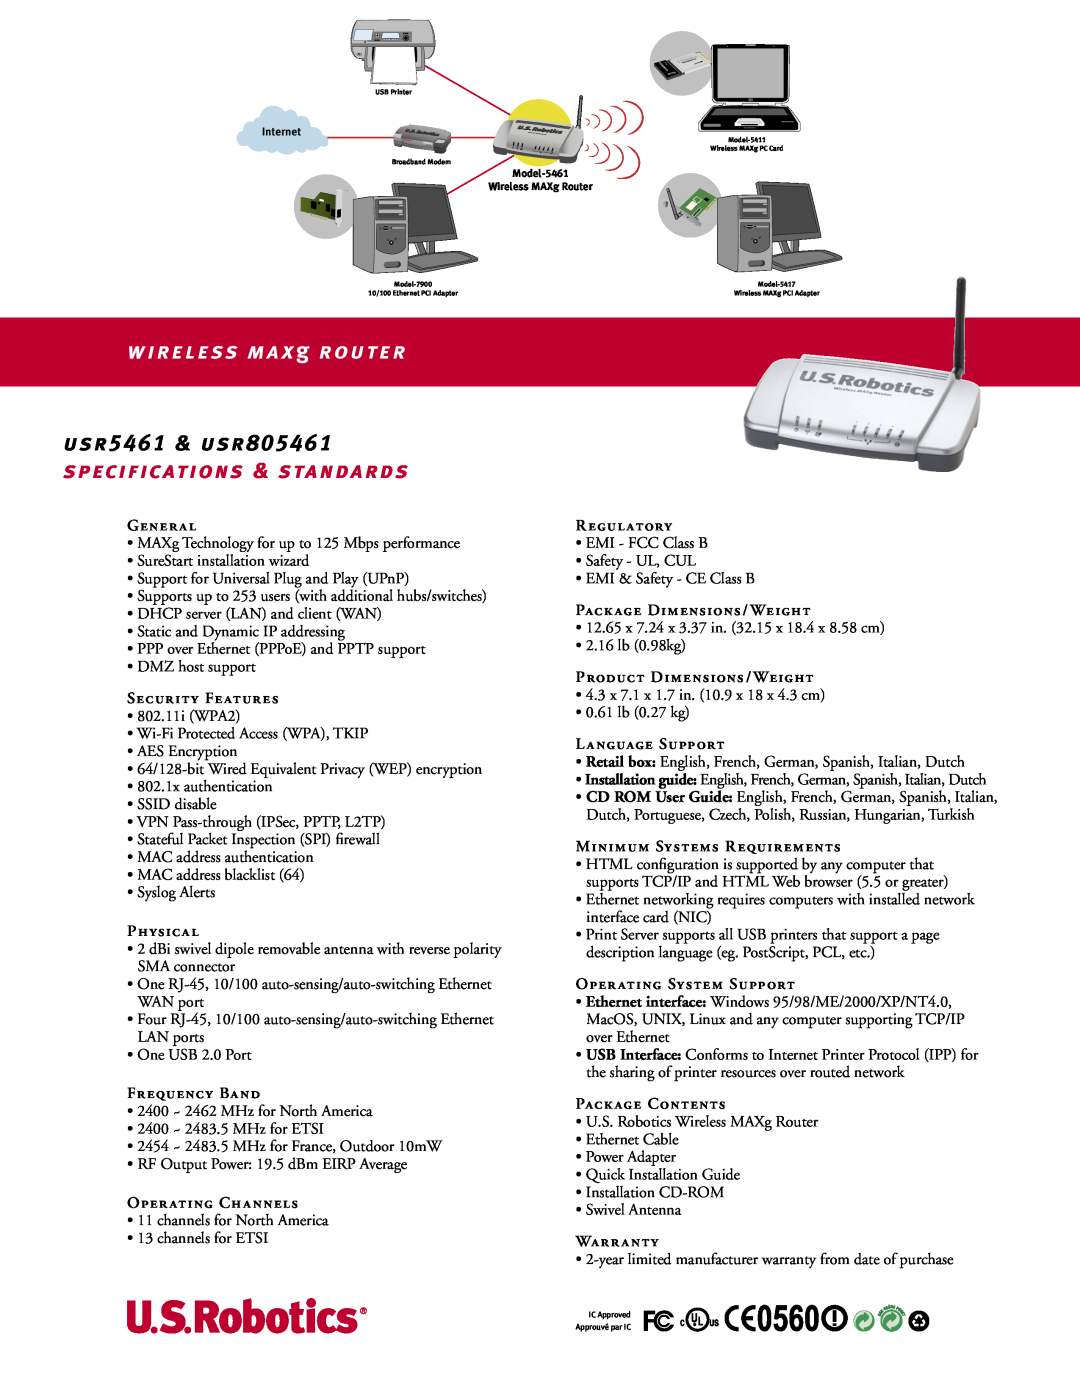 USRobotics manual wireless maxg router, usr5461 & usr805461 specifications & standards 